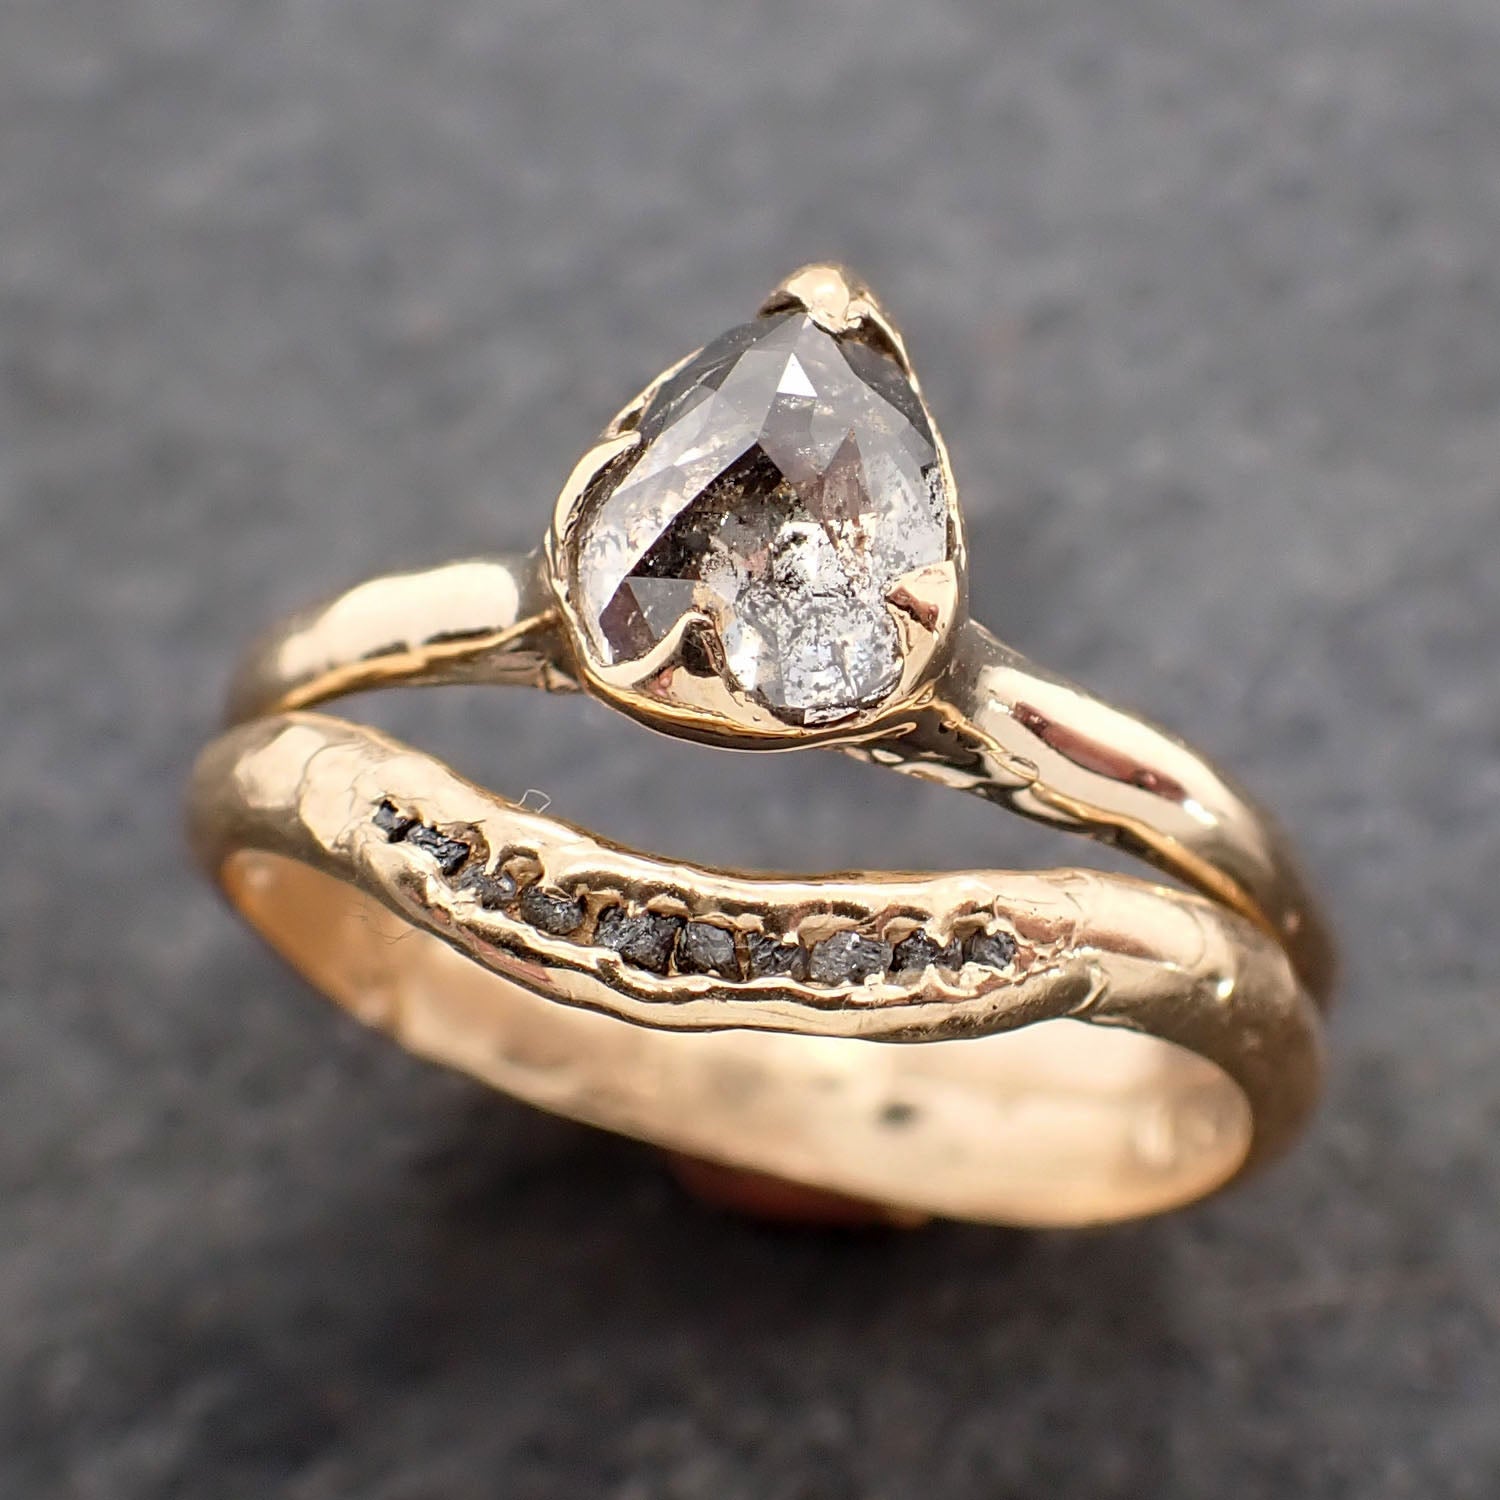 Fancy cut salt and pepper Diamond Solitaire Engagement 14k yellow Gold Wedding Ring Diamond Ring byAngeline 2613